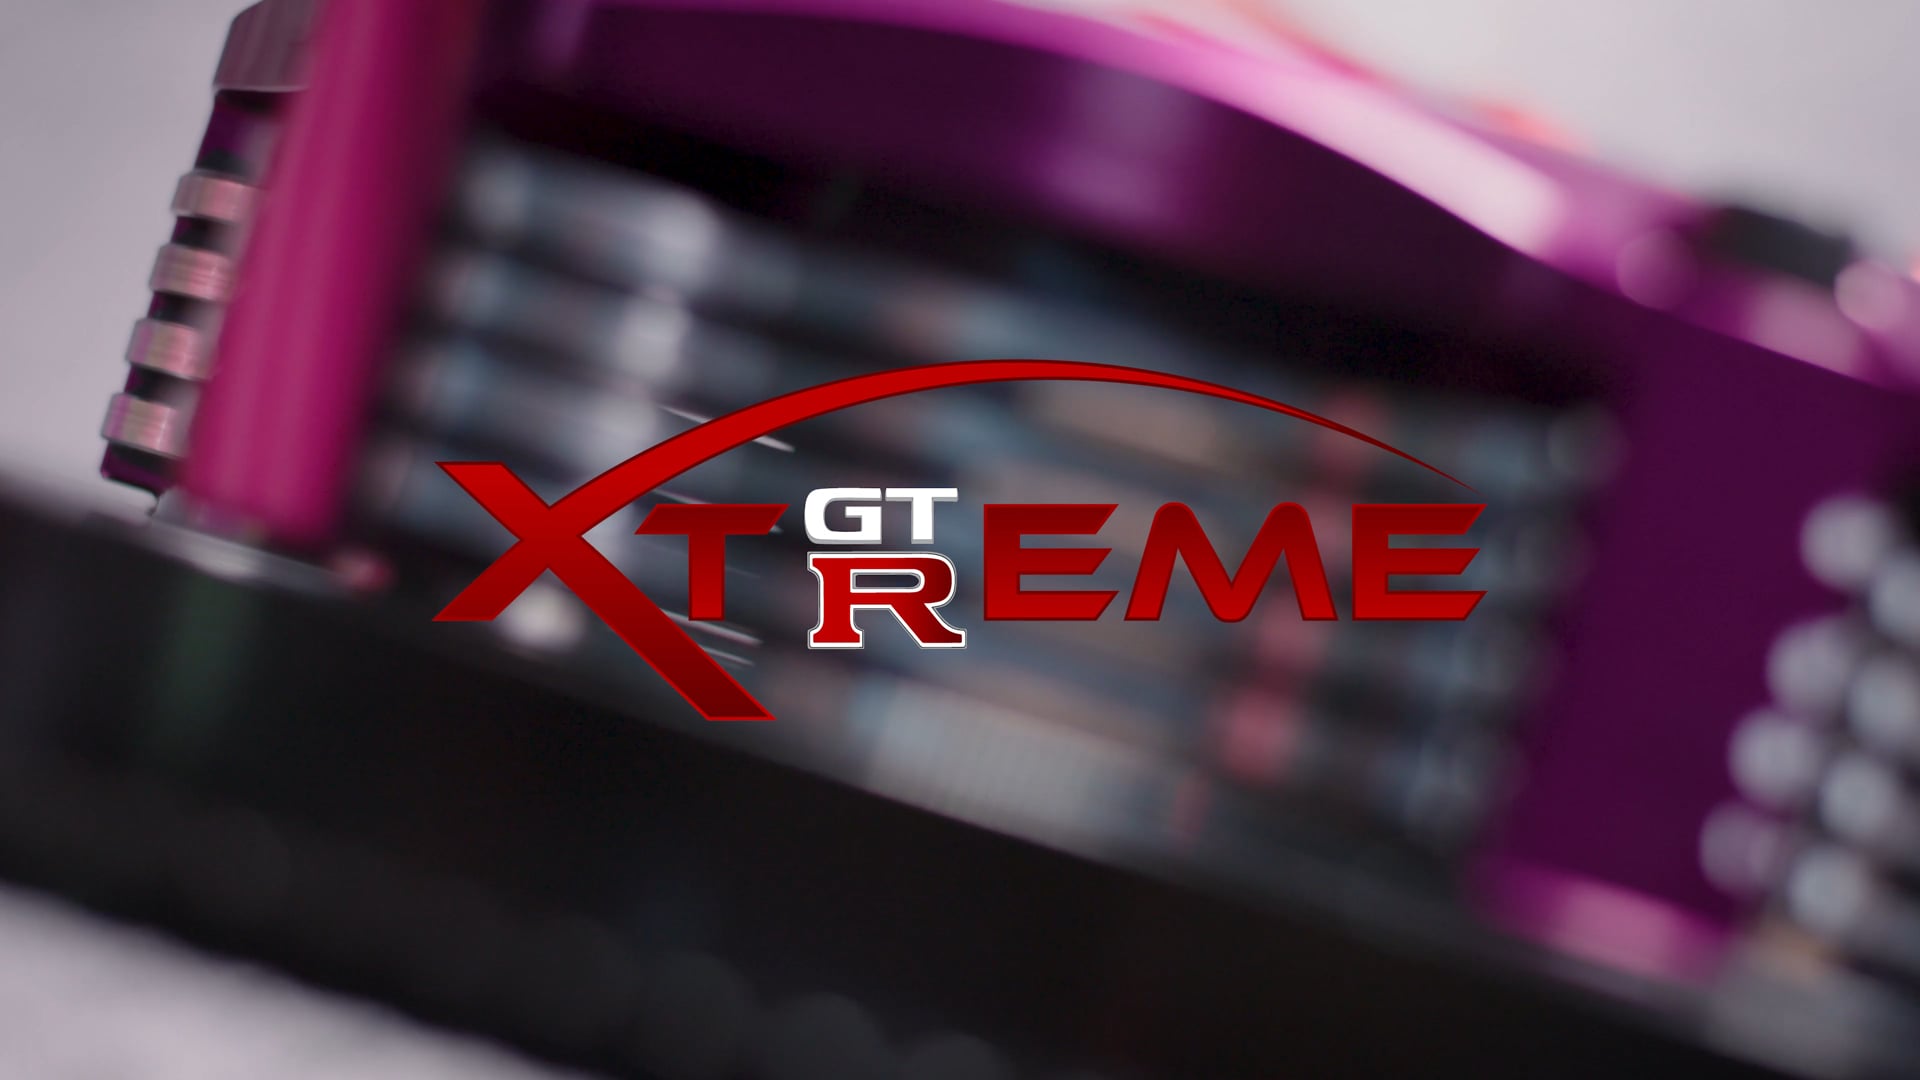 Xtreme GTR - Clutch Breakdown